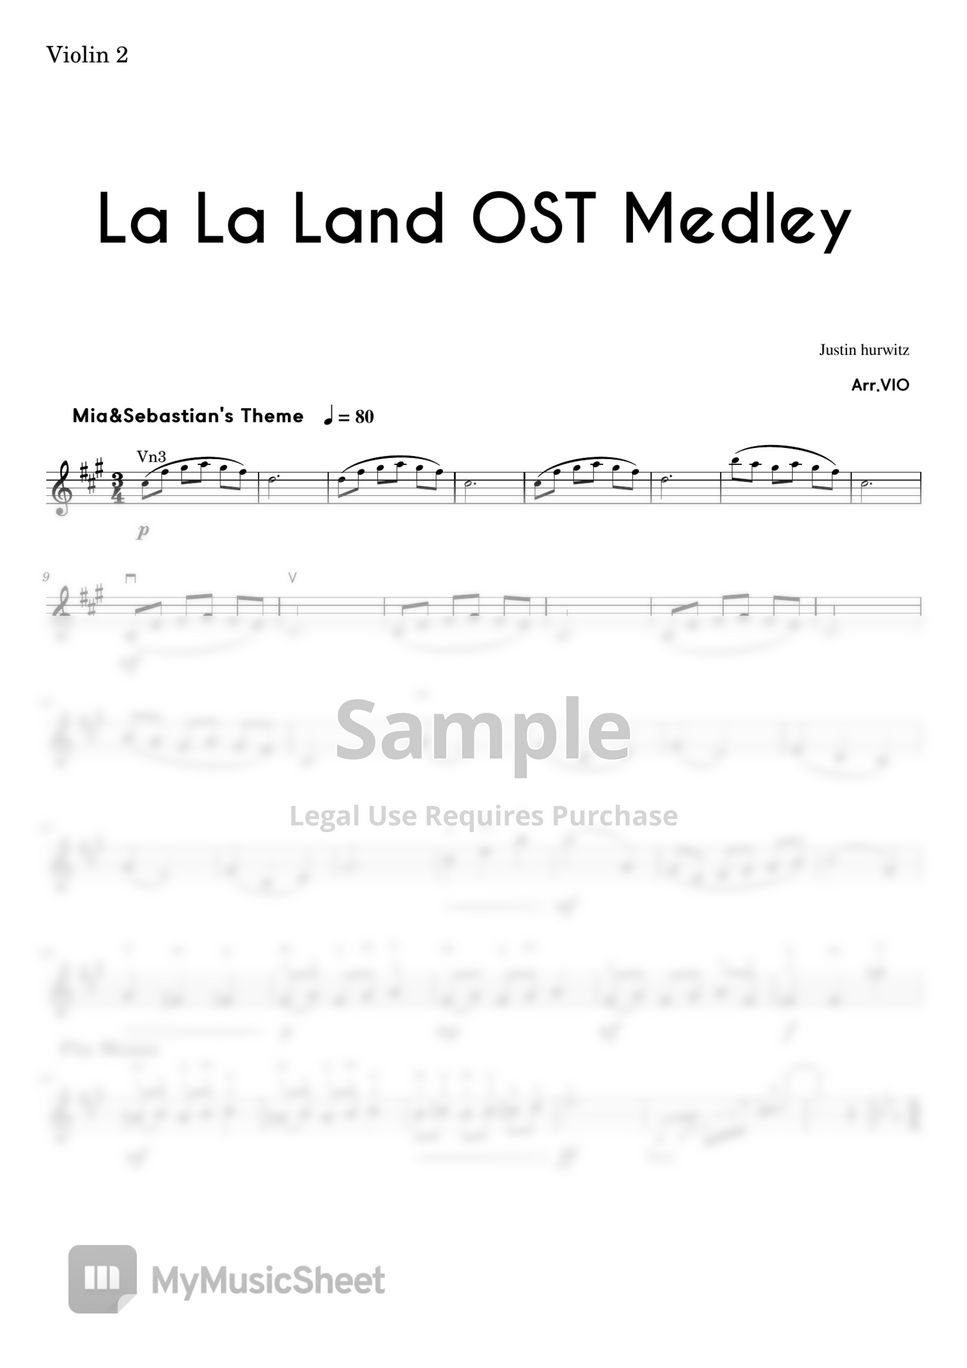 Justin hurwitz - La La Land OST Medley (for 4Violin) by VIO